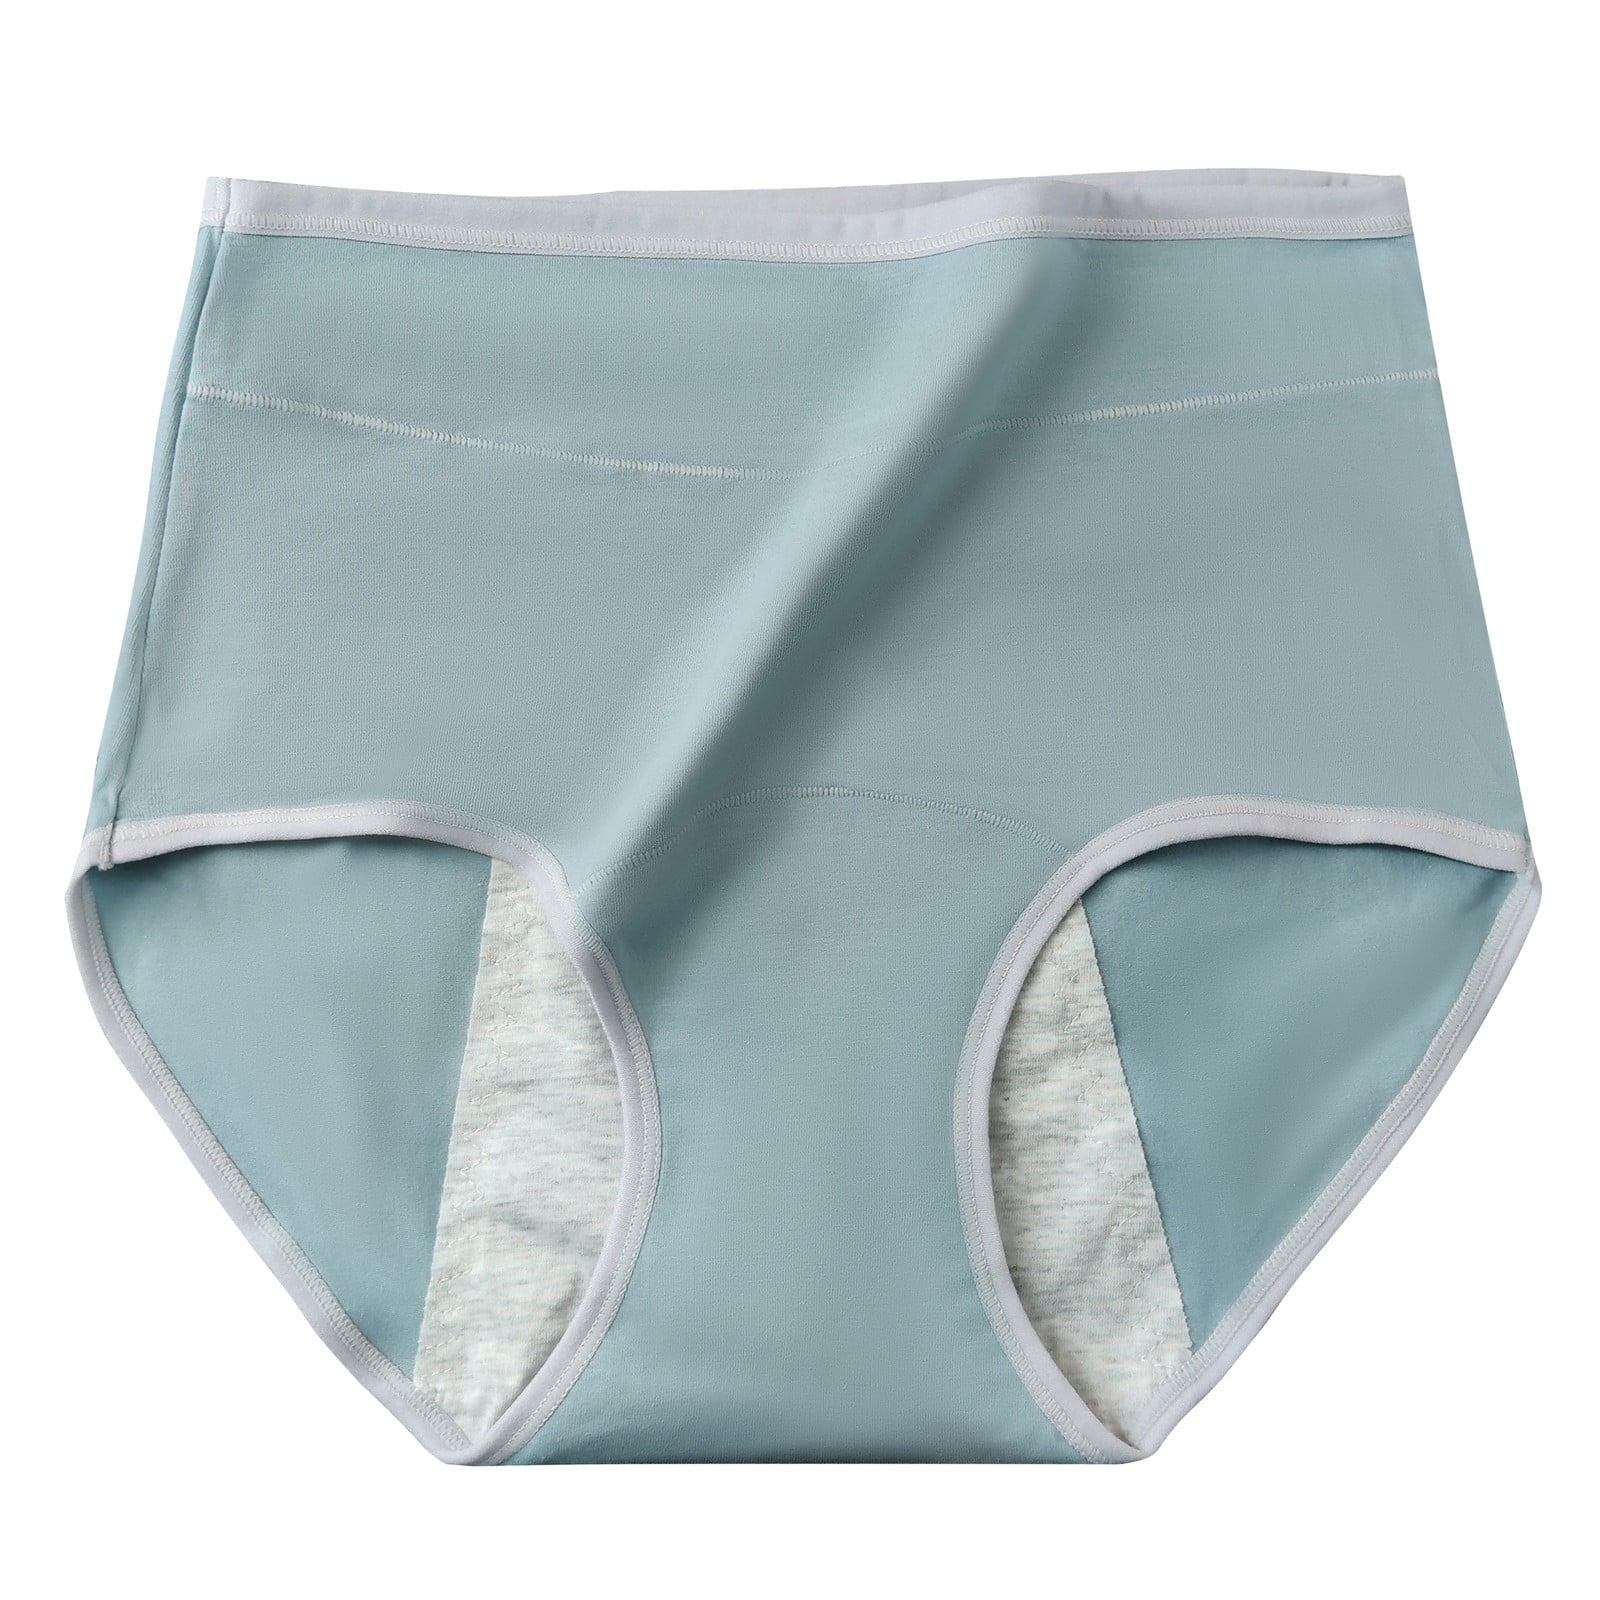 PMUYBHF Plus Size Underwear for Women 4X-5X Women's High Waist Pants  Panties Menstruation Leakproof Cotton File Women's Briefs Women Underwear 